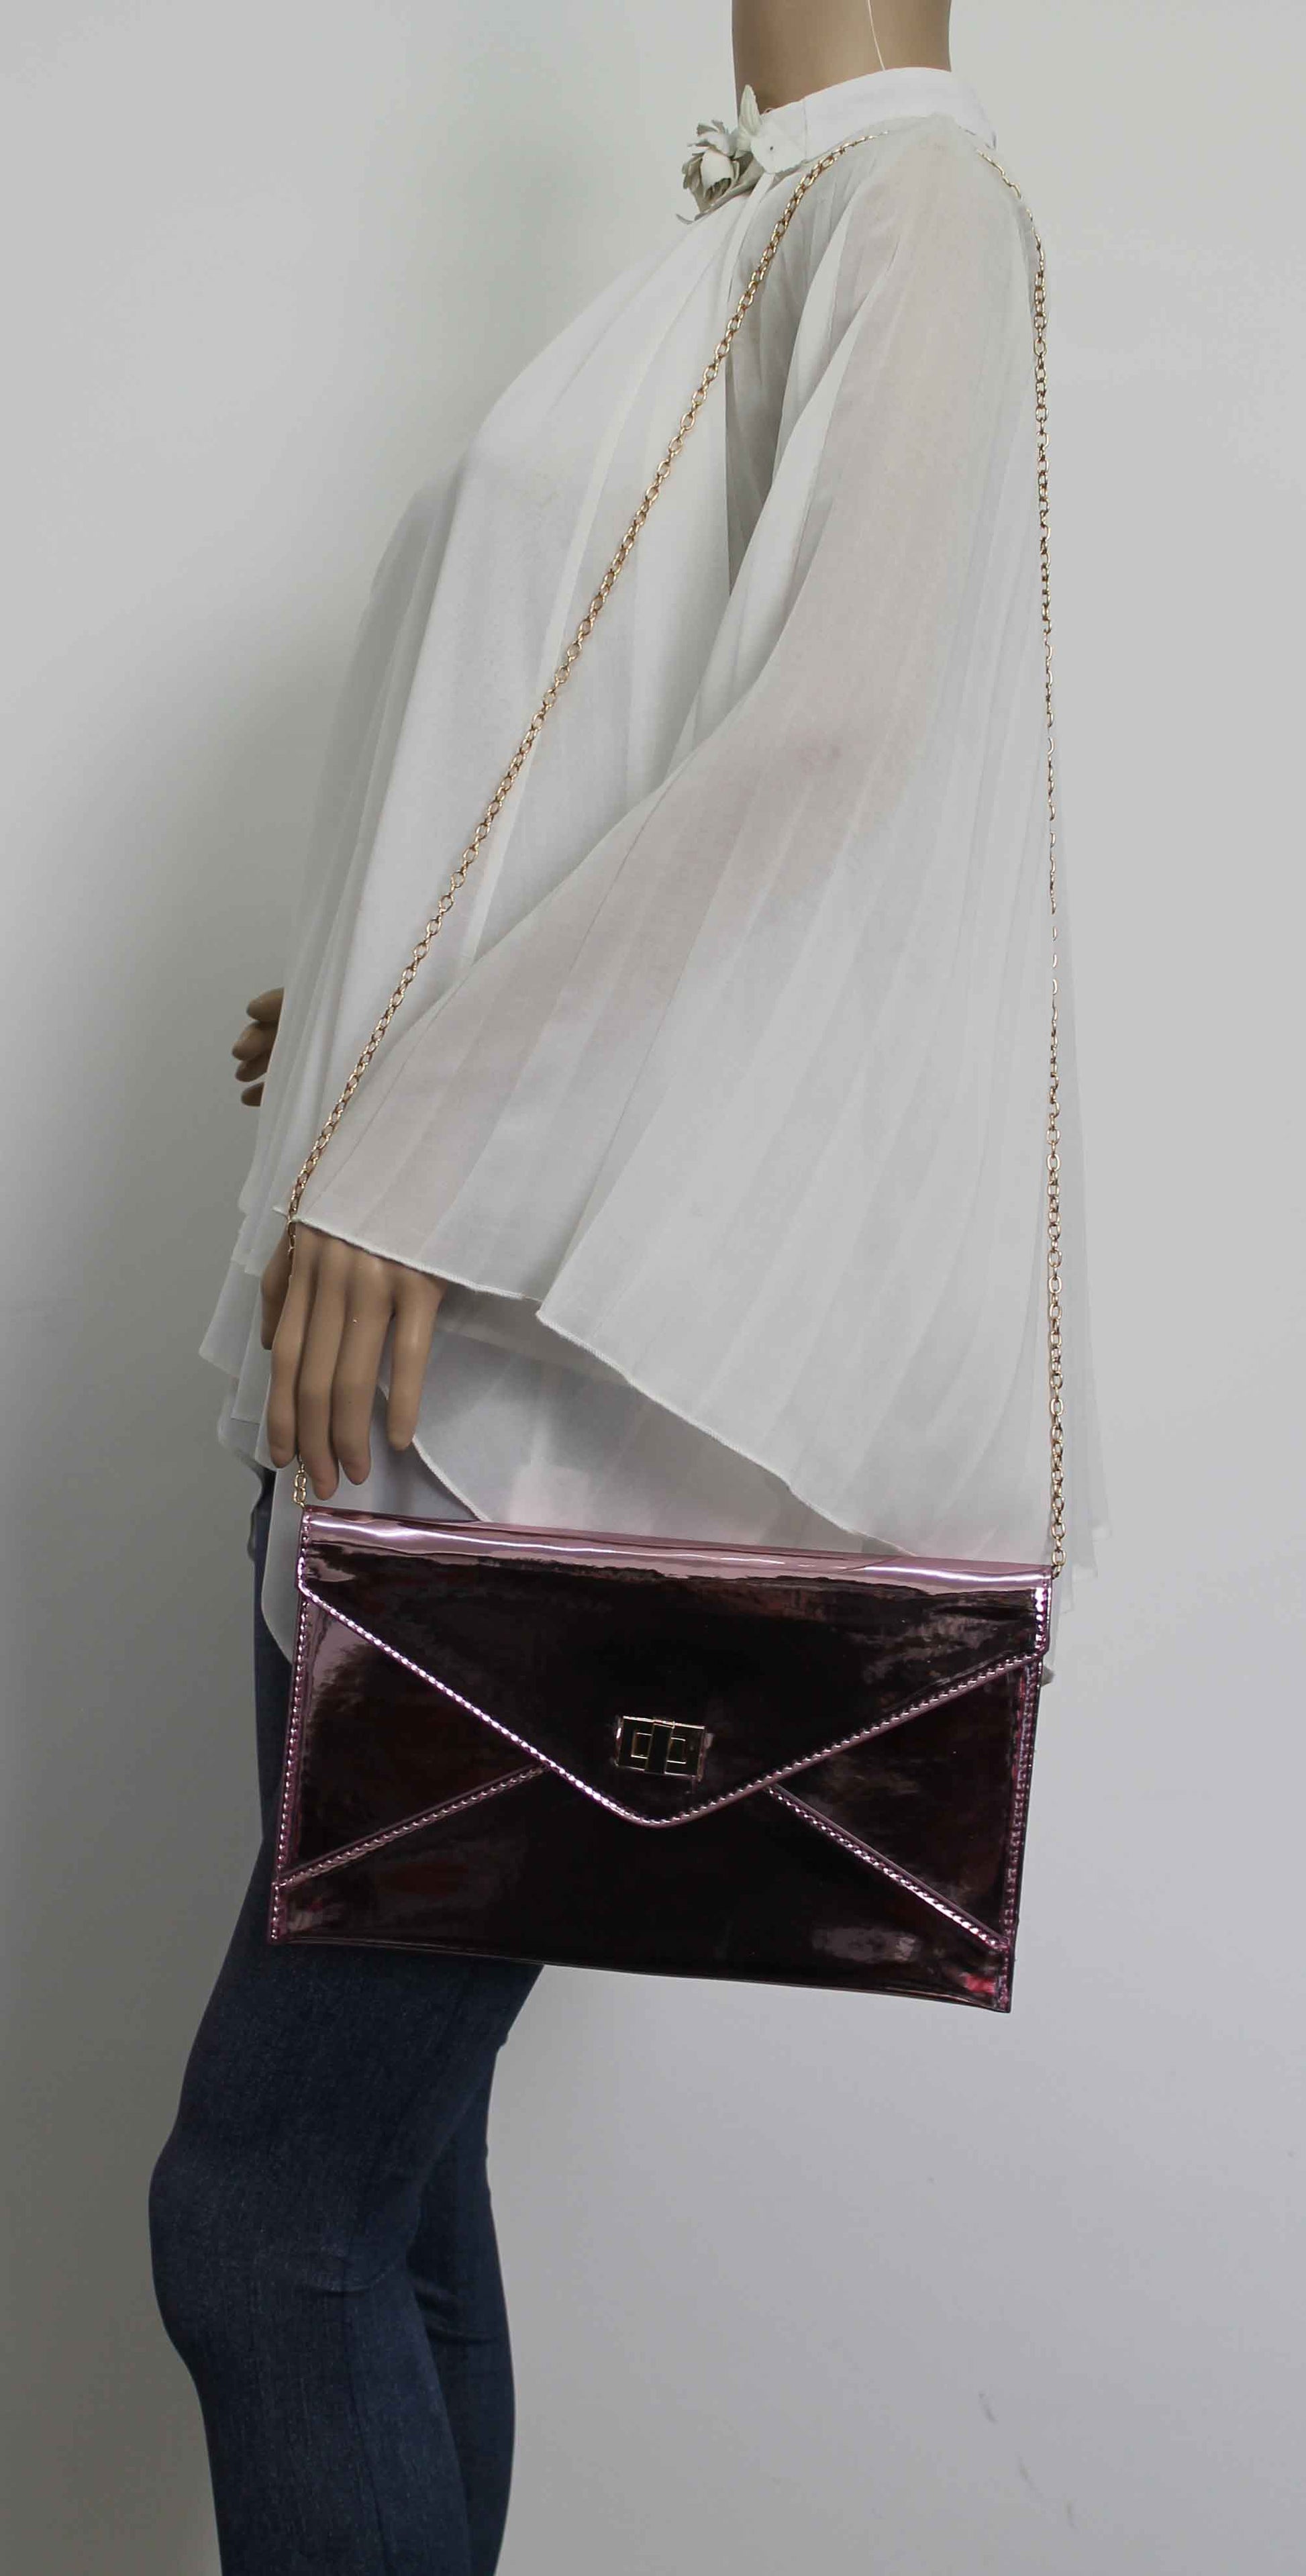 SWANKYSWANS Sarah Envelope Clutch Bag Pink Cute Cheap Clutch Bag For Weddings School and Work